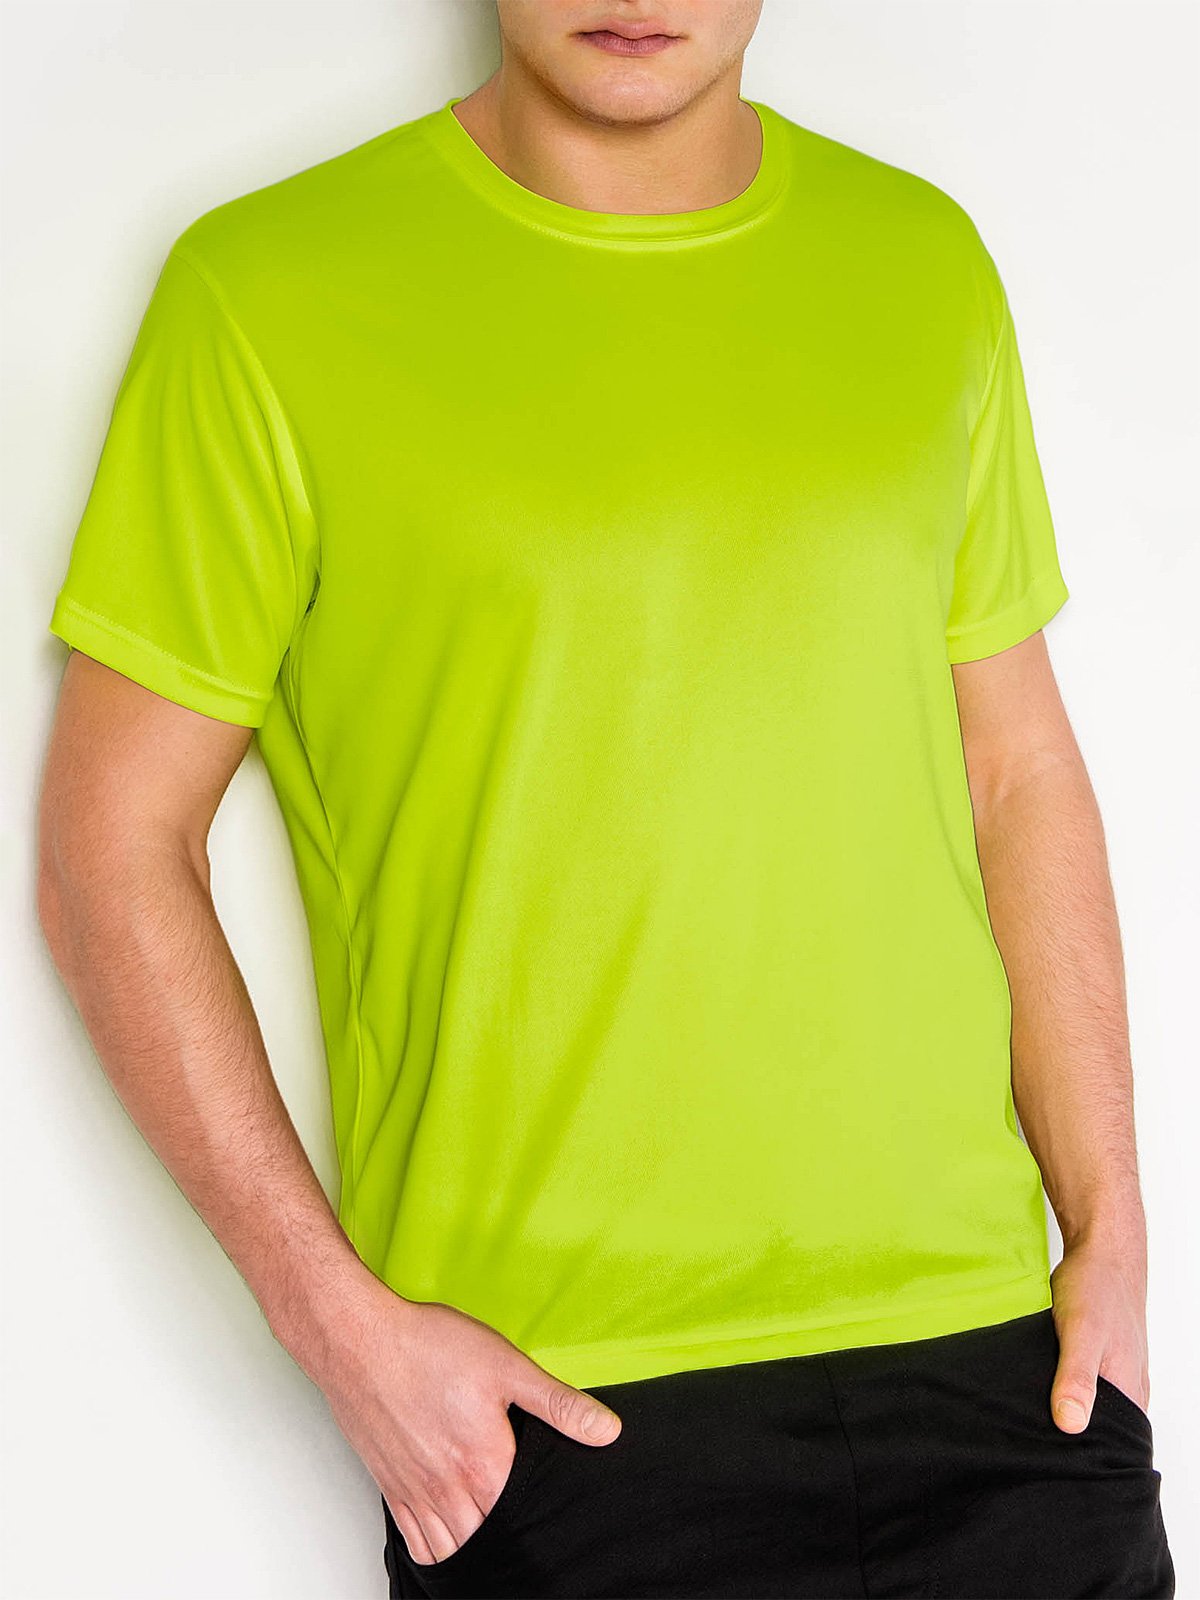 Men's plain t-shirt S883 - yellow | MODONE wholesale - Clothing For Men